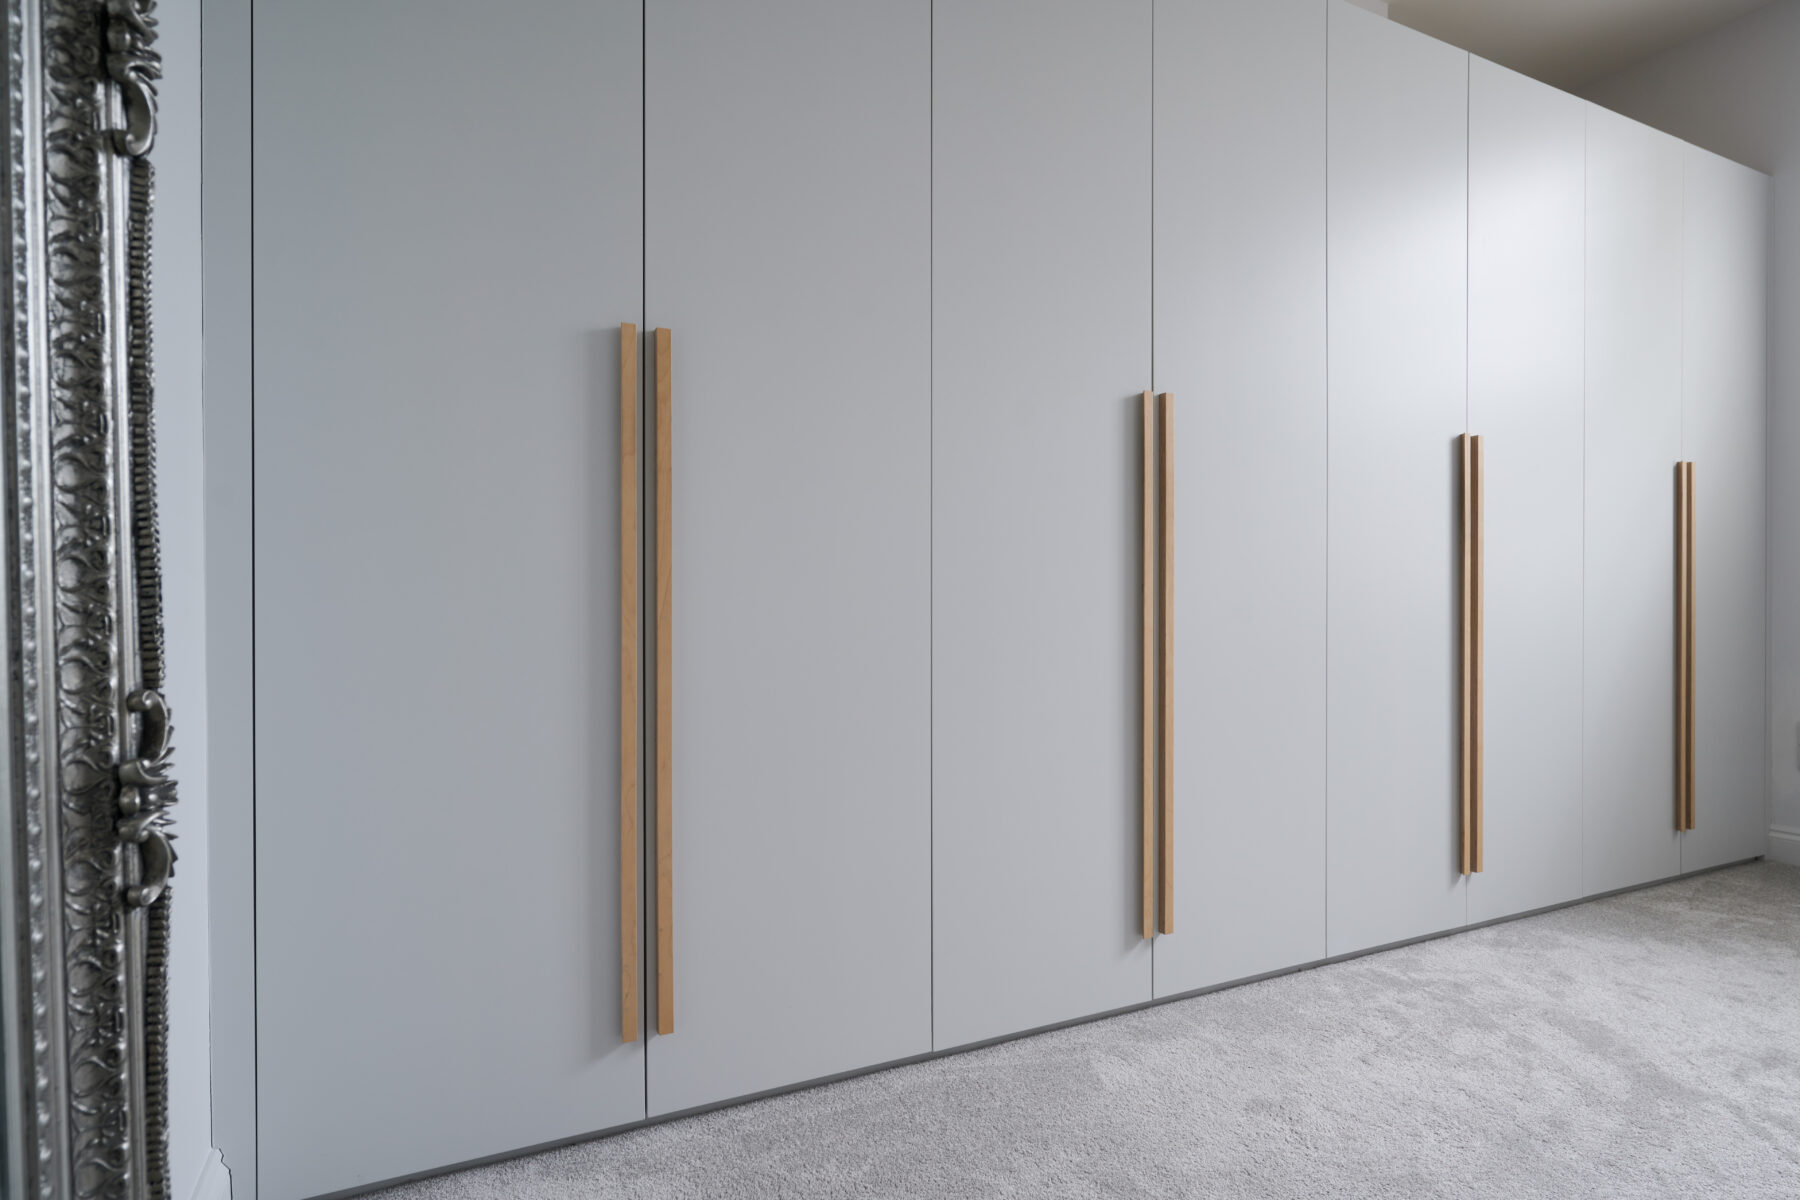 Contemporary slab door wardrobes with bespoke wooden handles